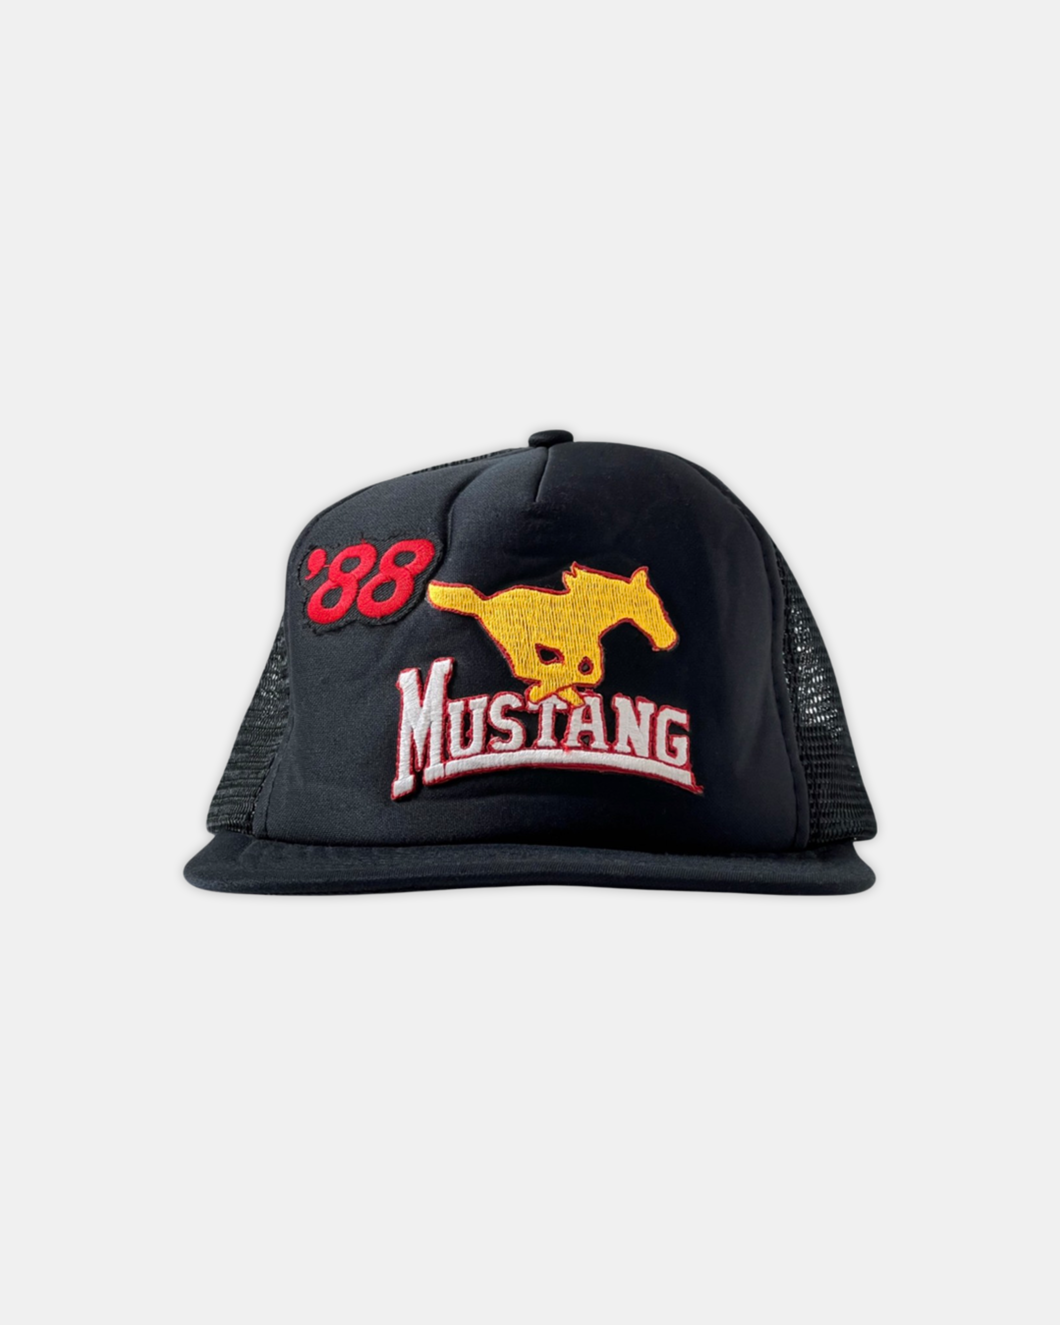 Vintage 1988 Ford Mustang Trucker Hat